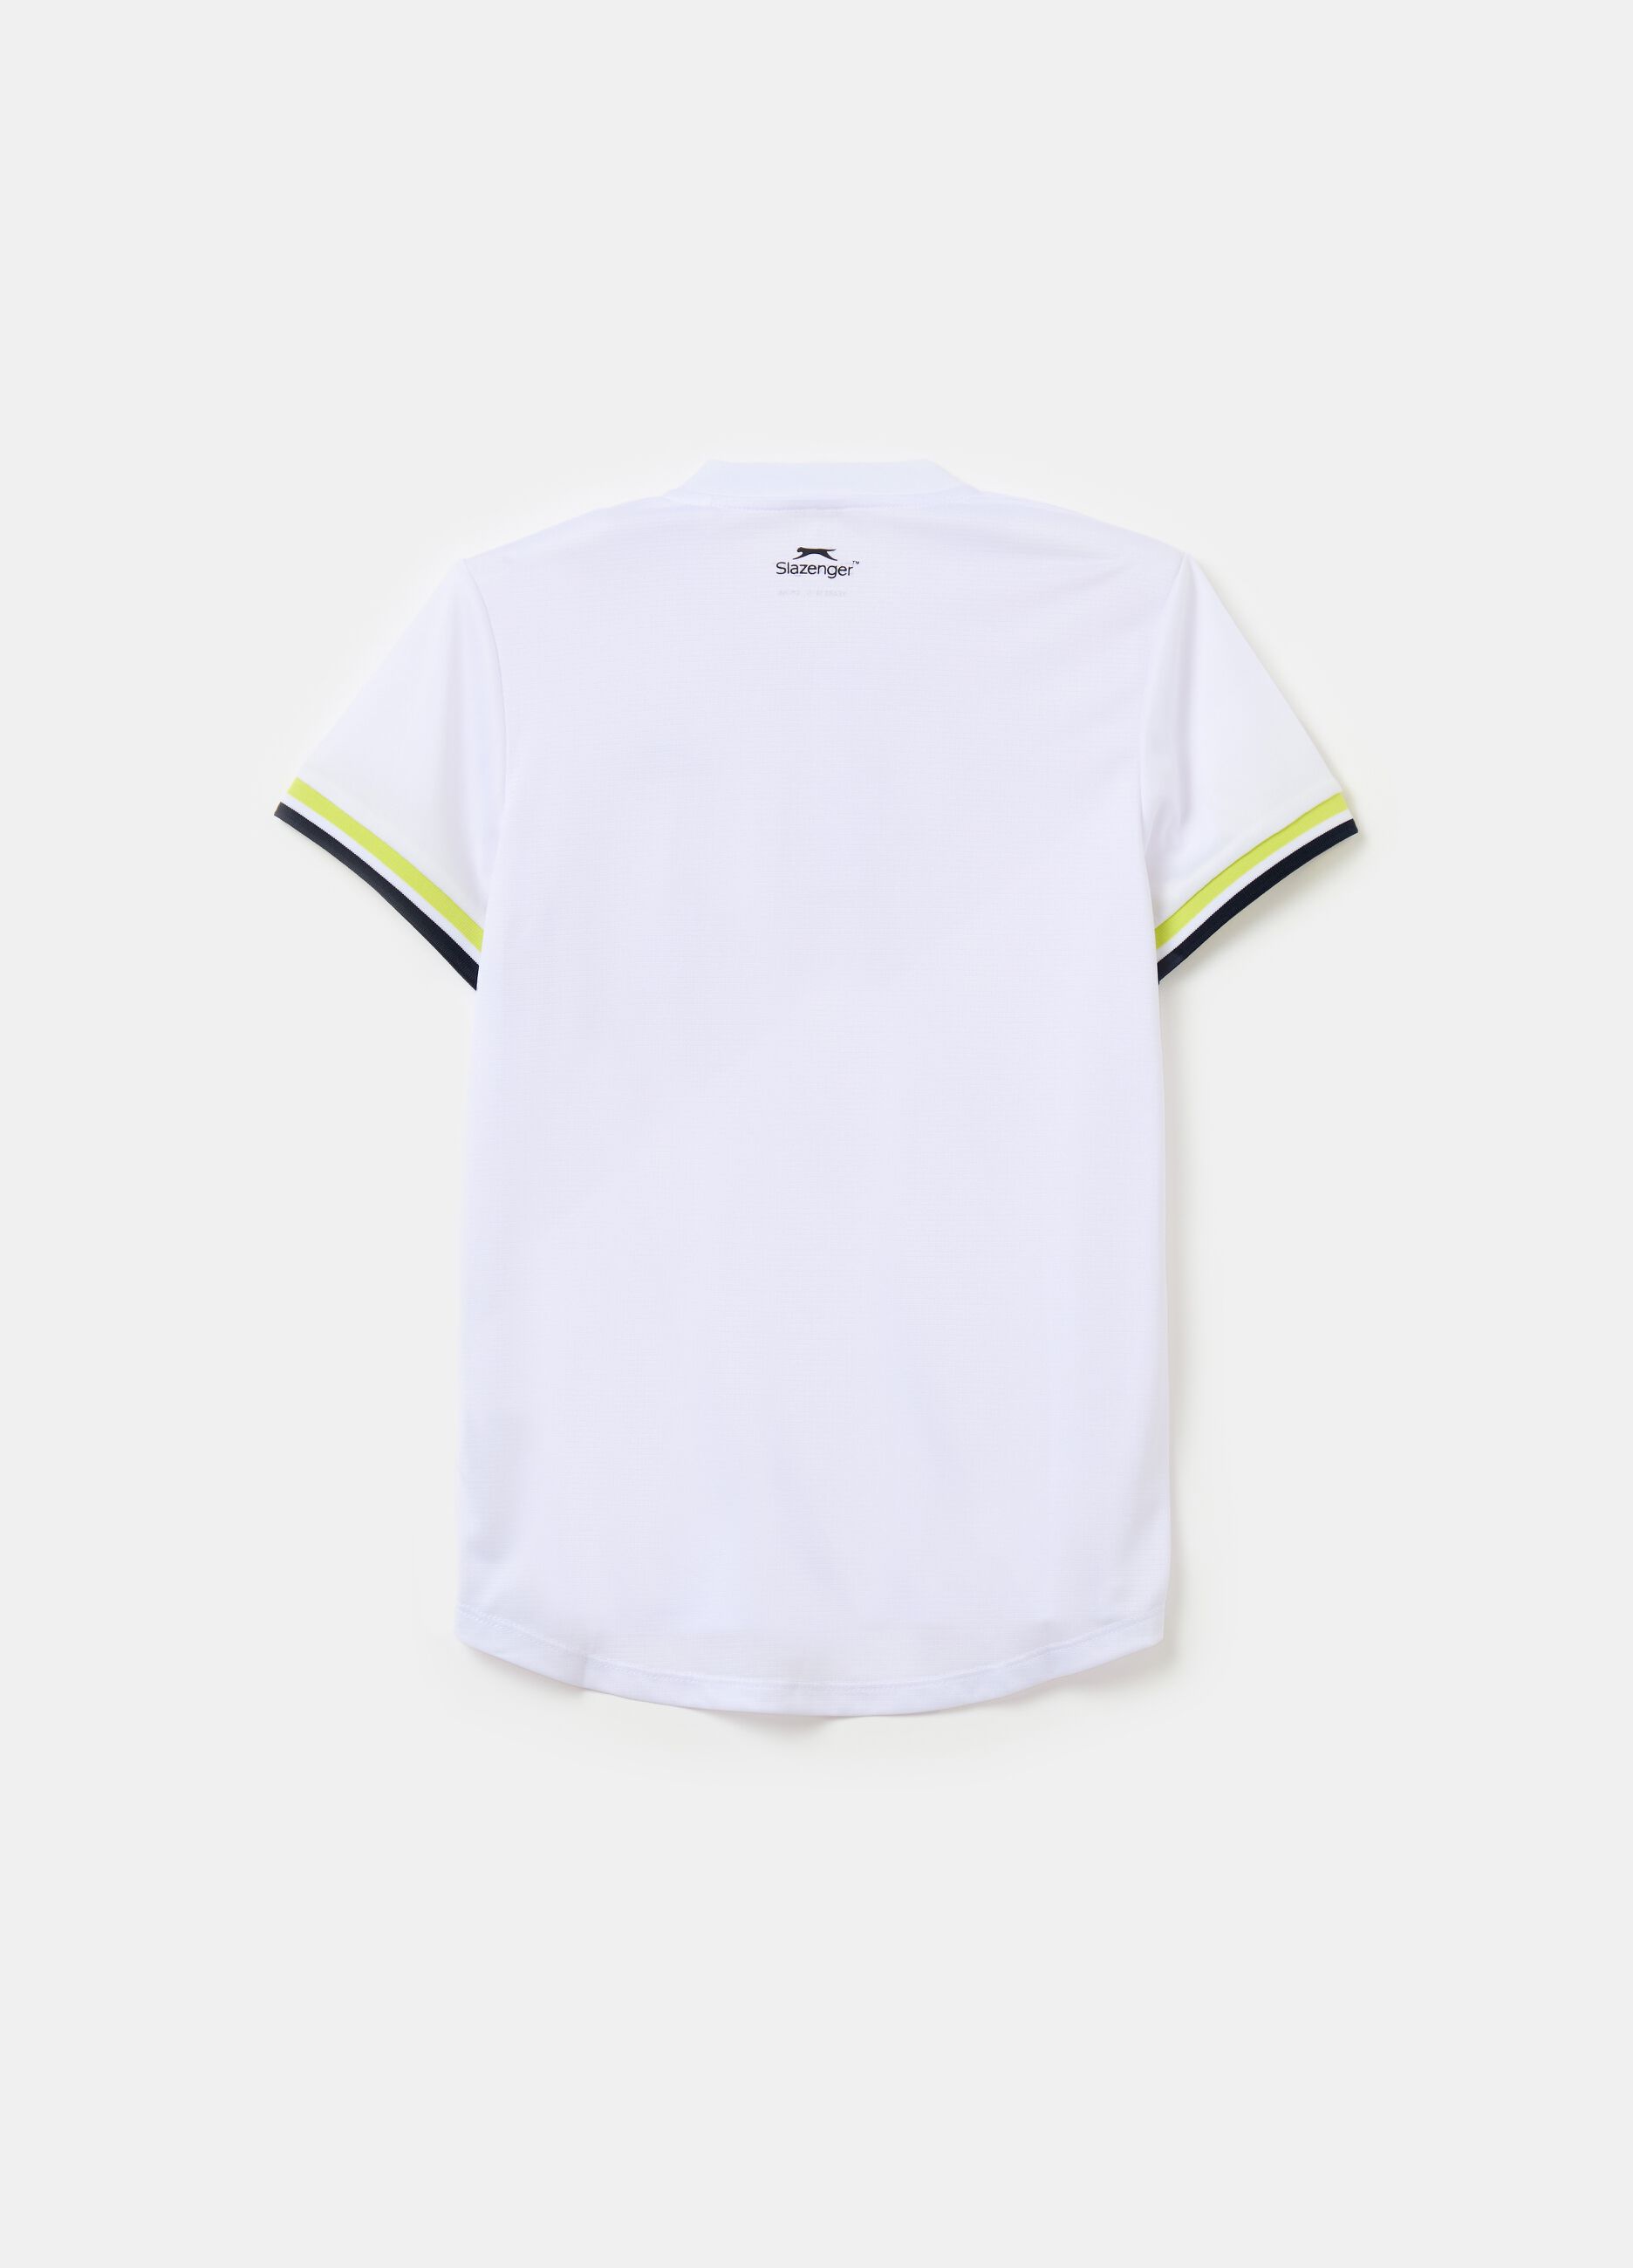 Slazenger tennis polo shirt with mandarin collar